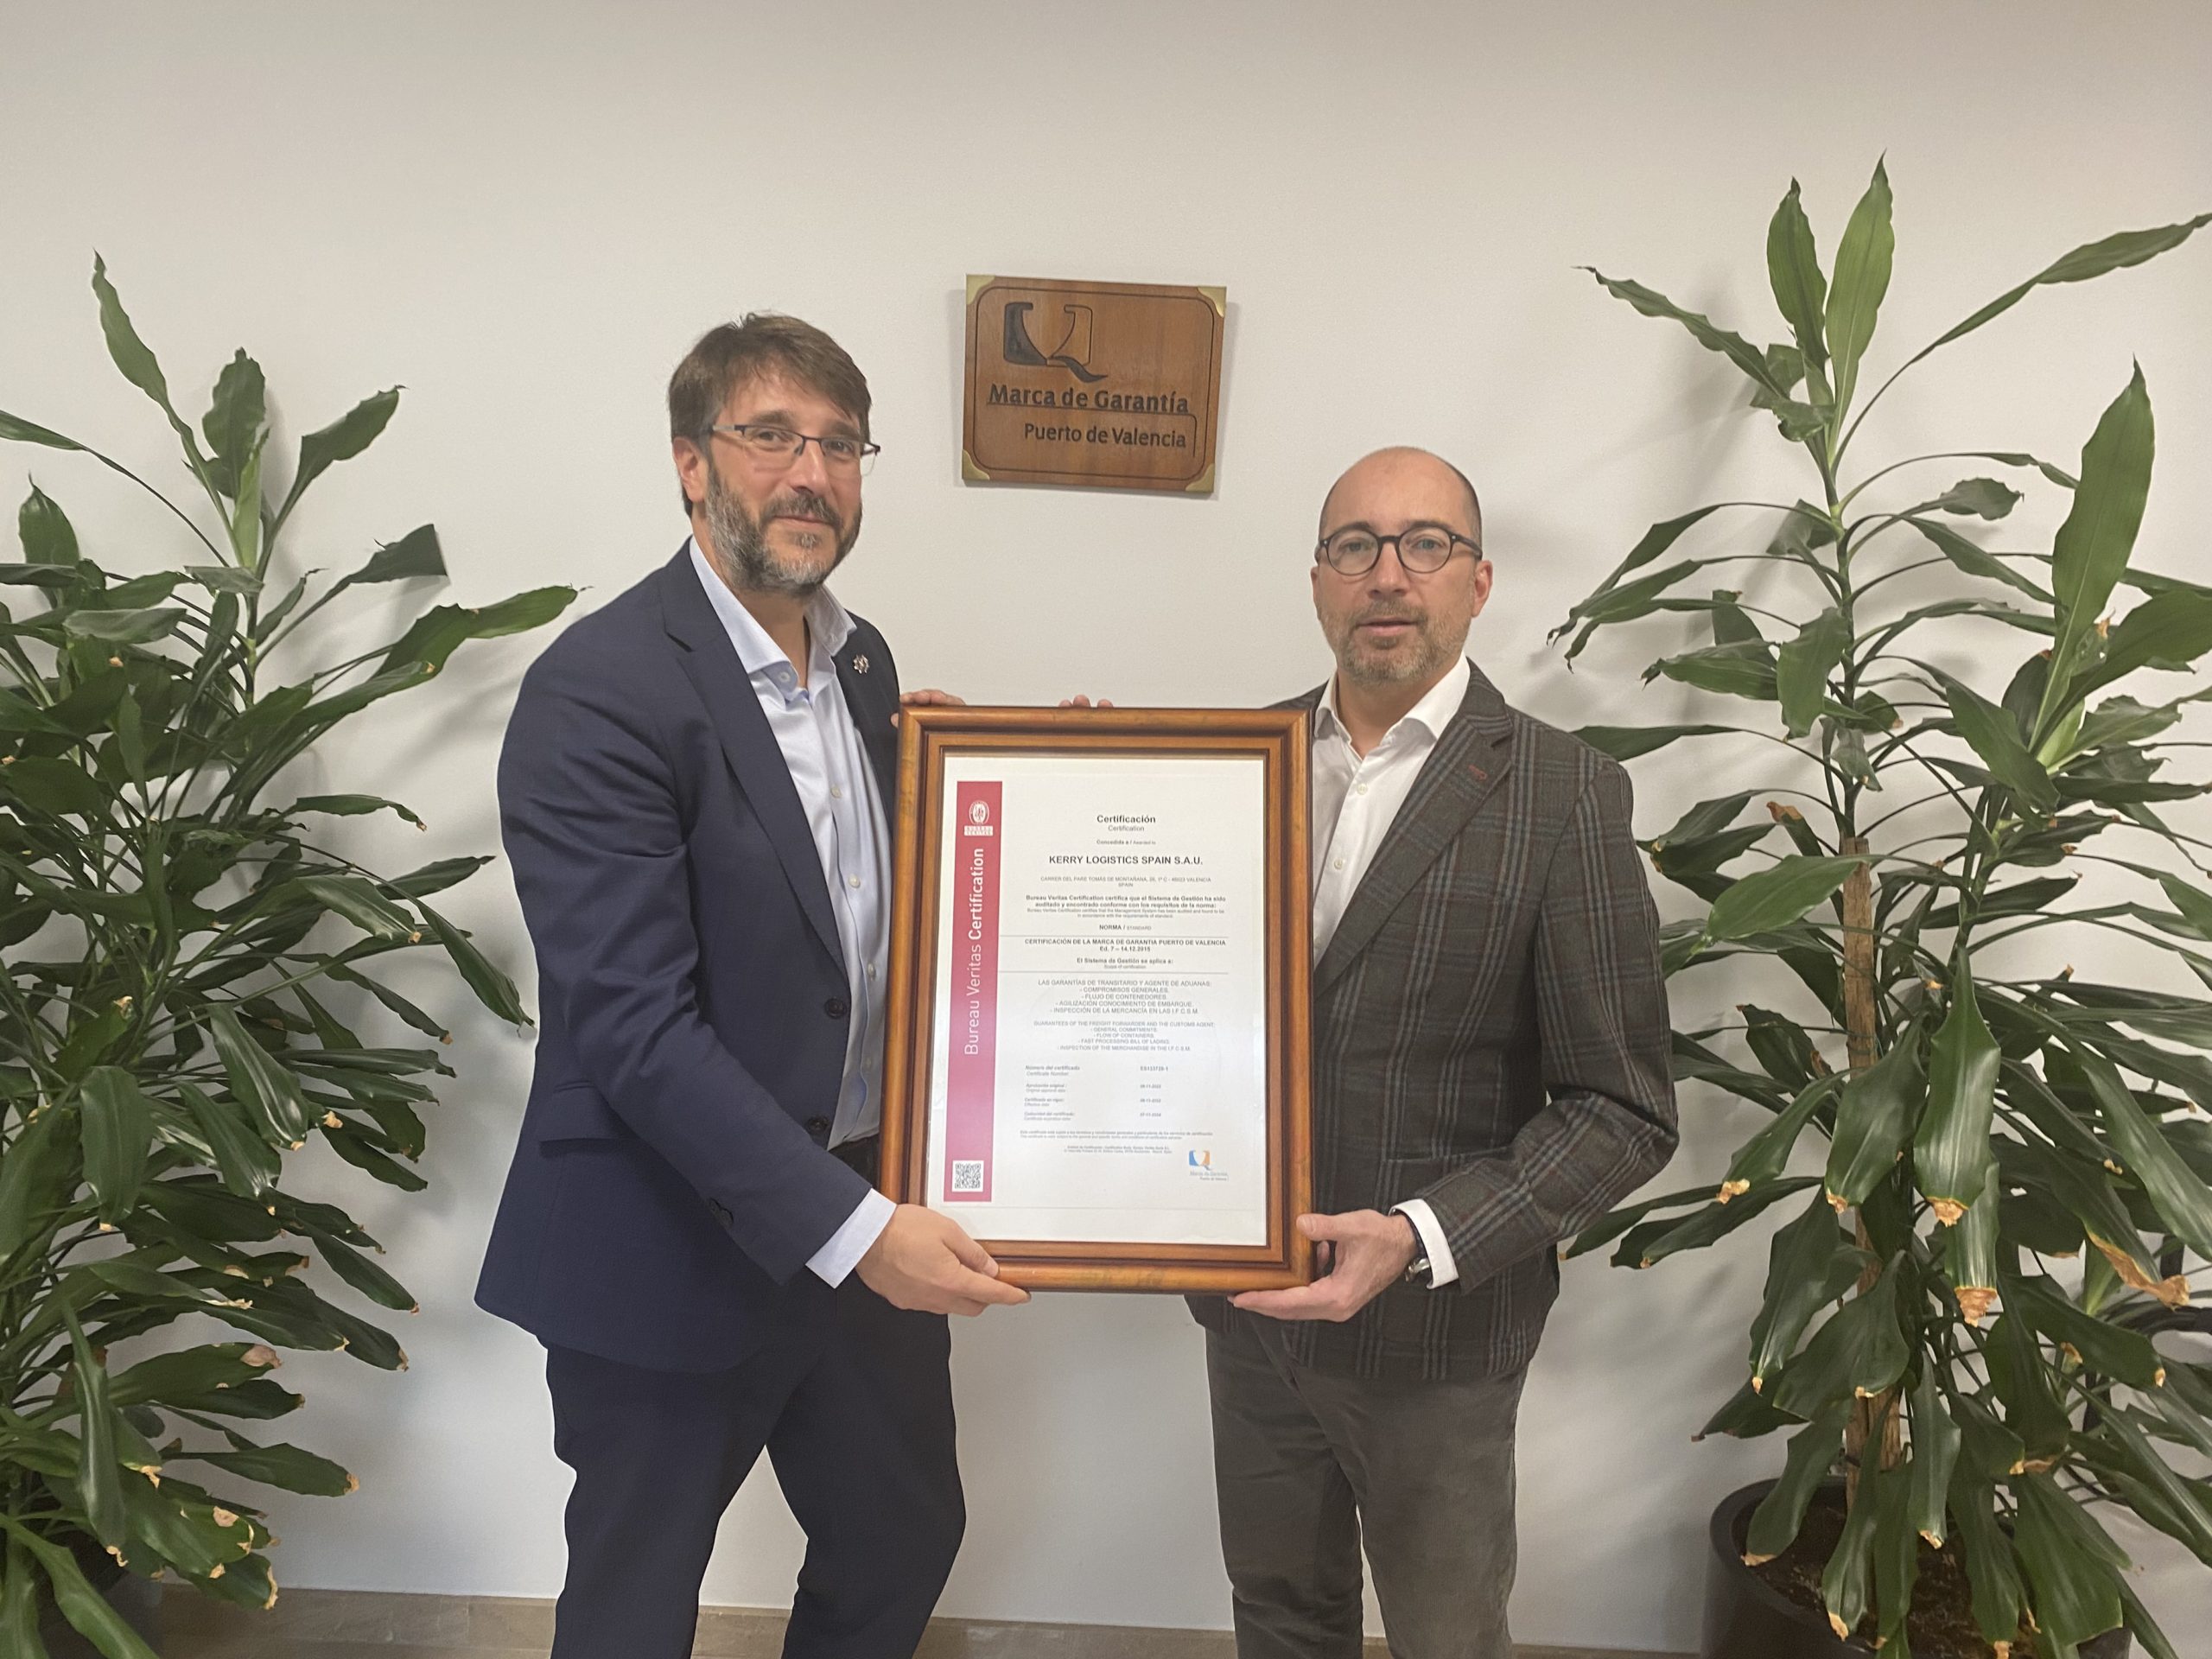 Entrega del diploma de certificación en Marca de Garantía a Kerry Logistics Spain S.A.U.